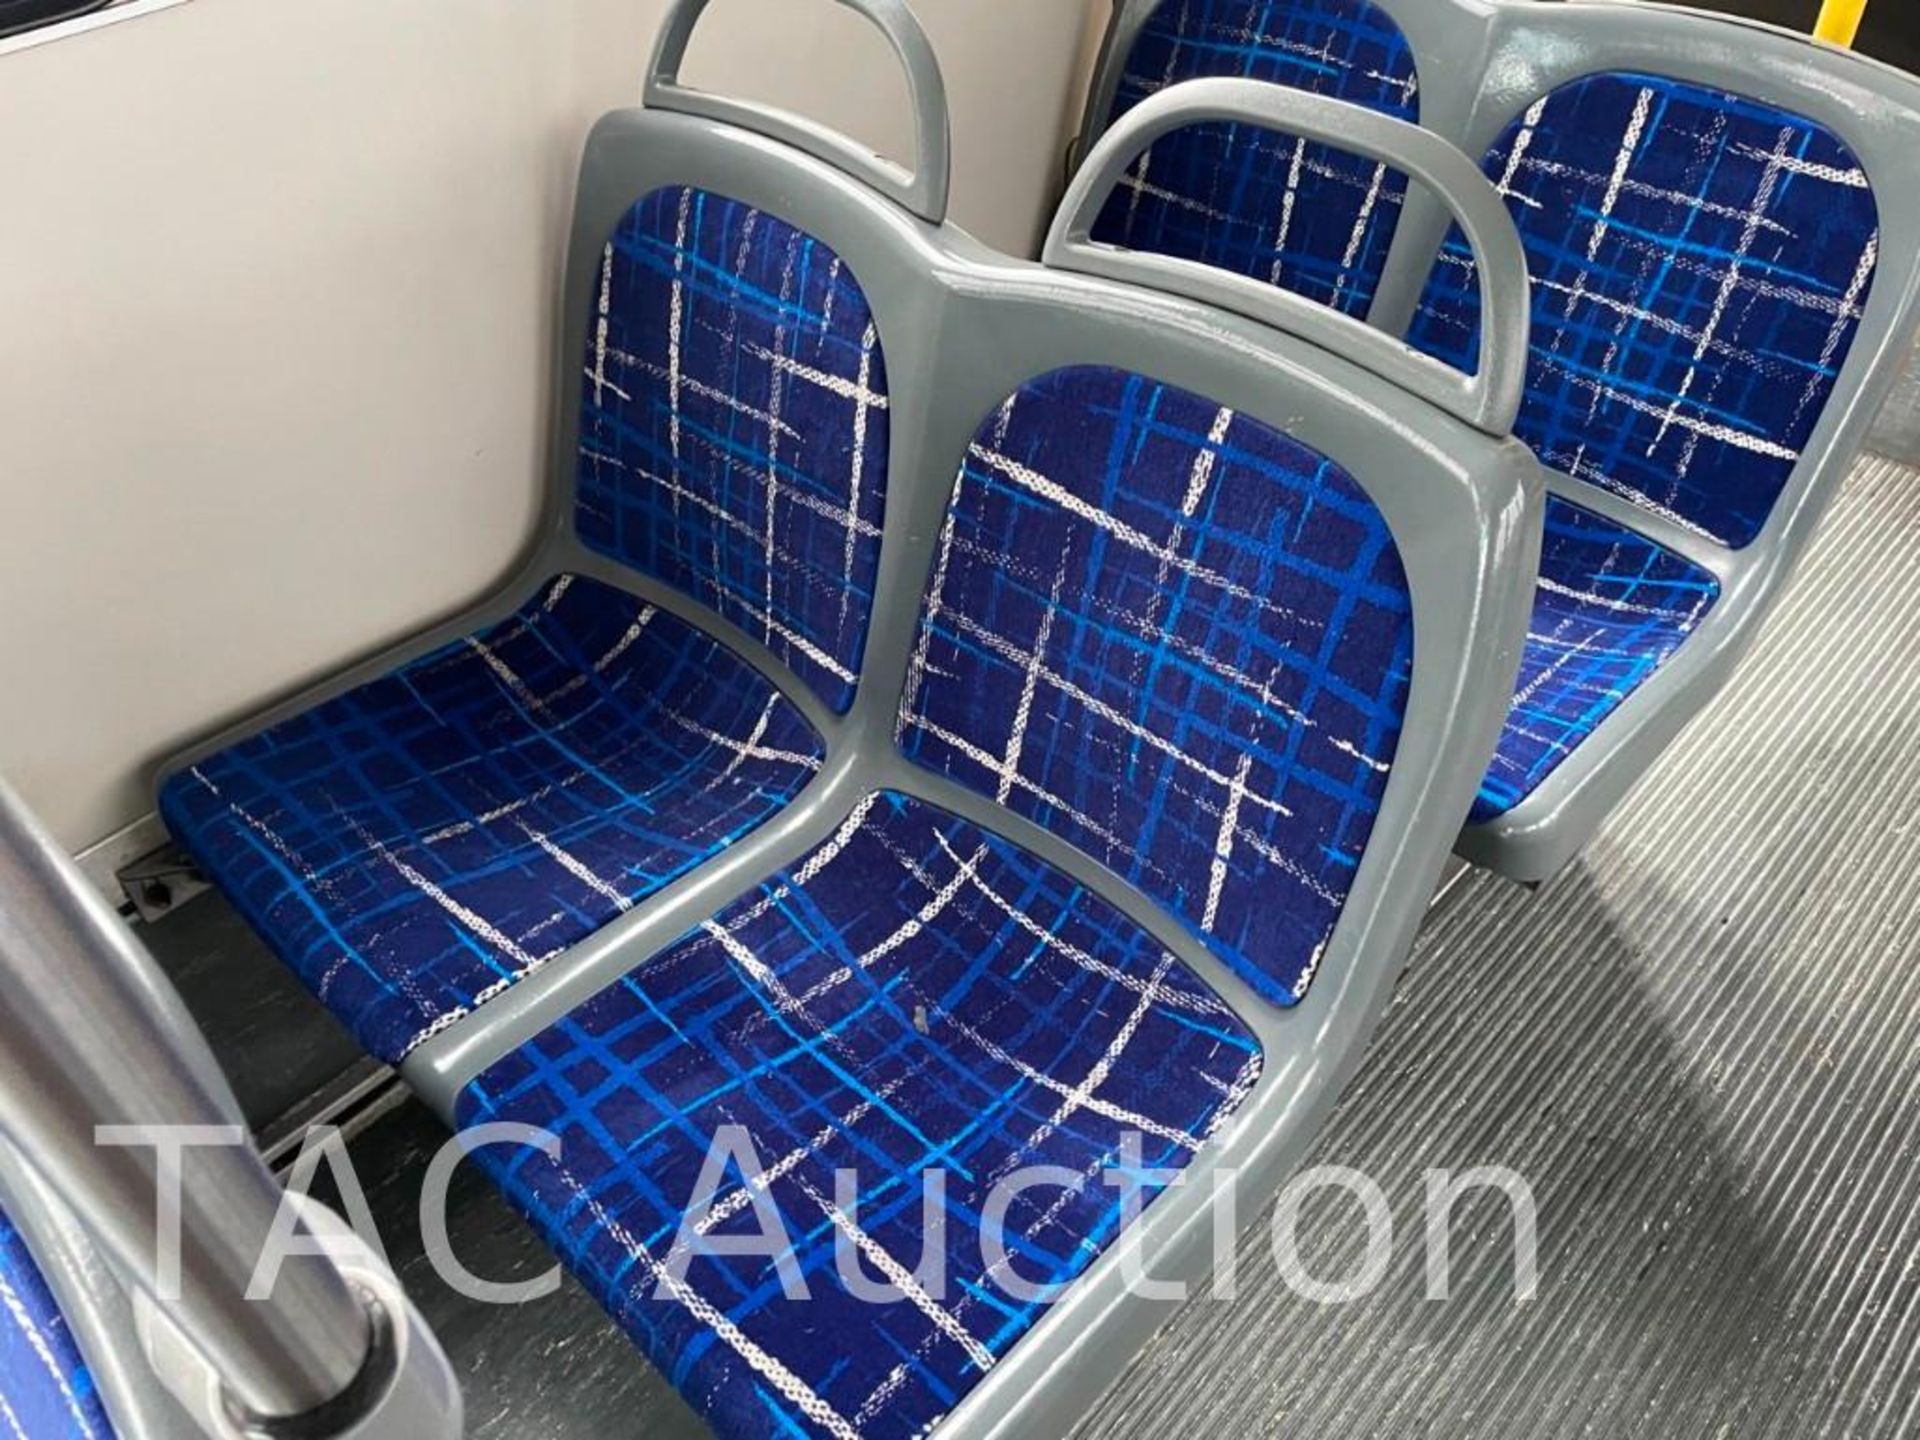 2005 Gillig Low Floor (40) Passenger Coach Transit Bus - Image 57 of 91